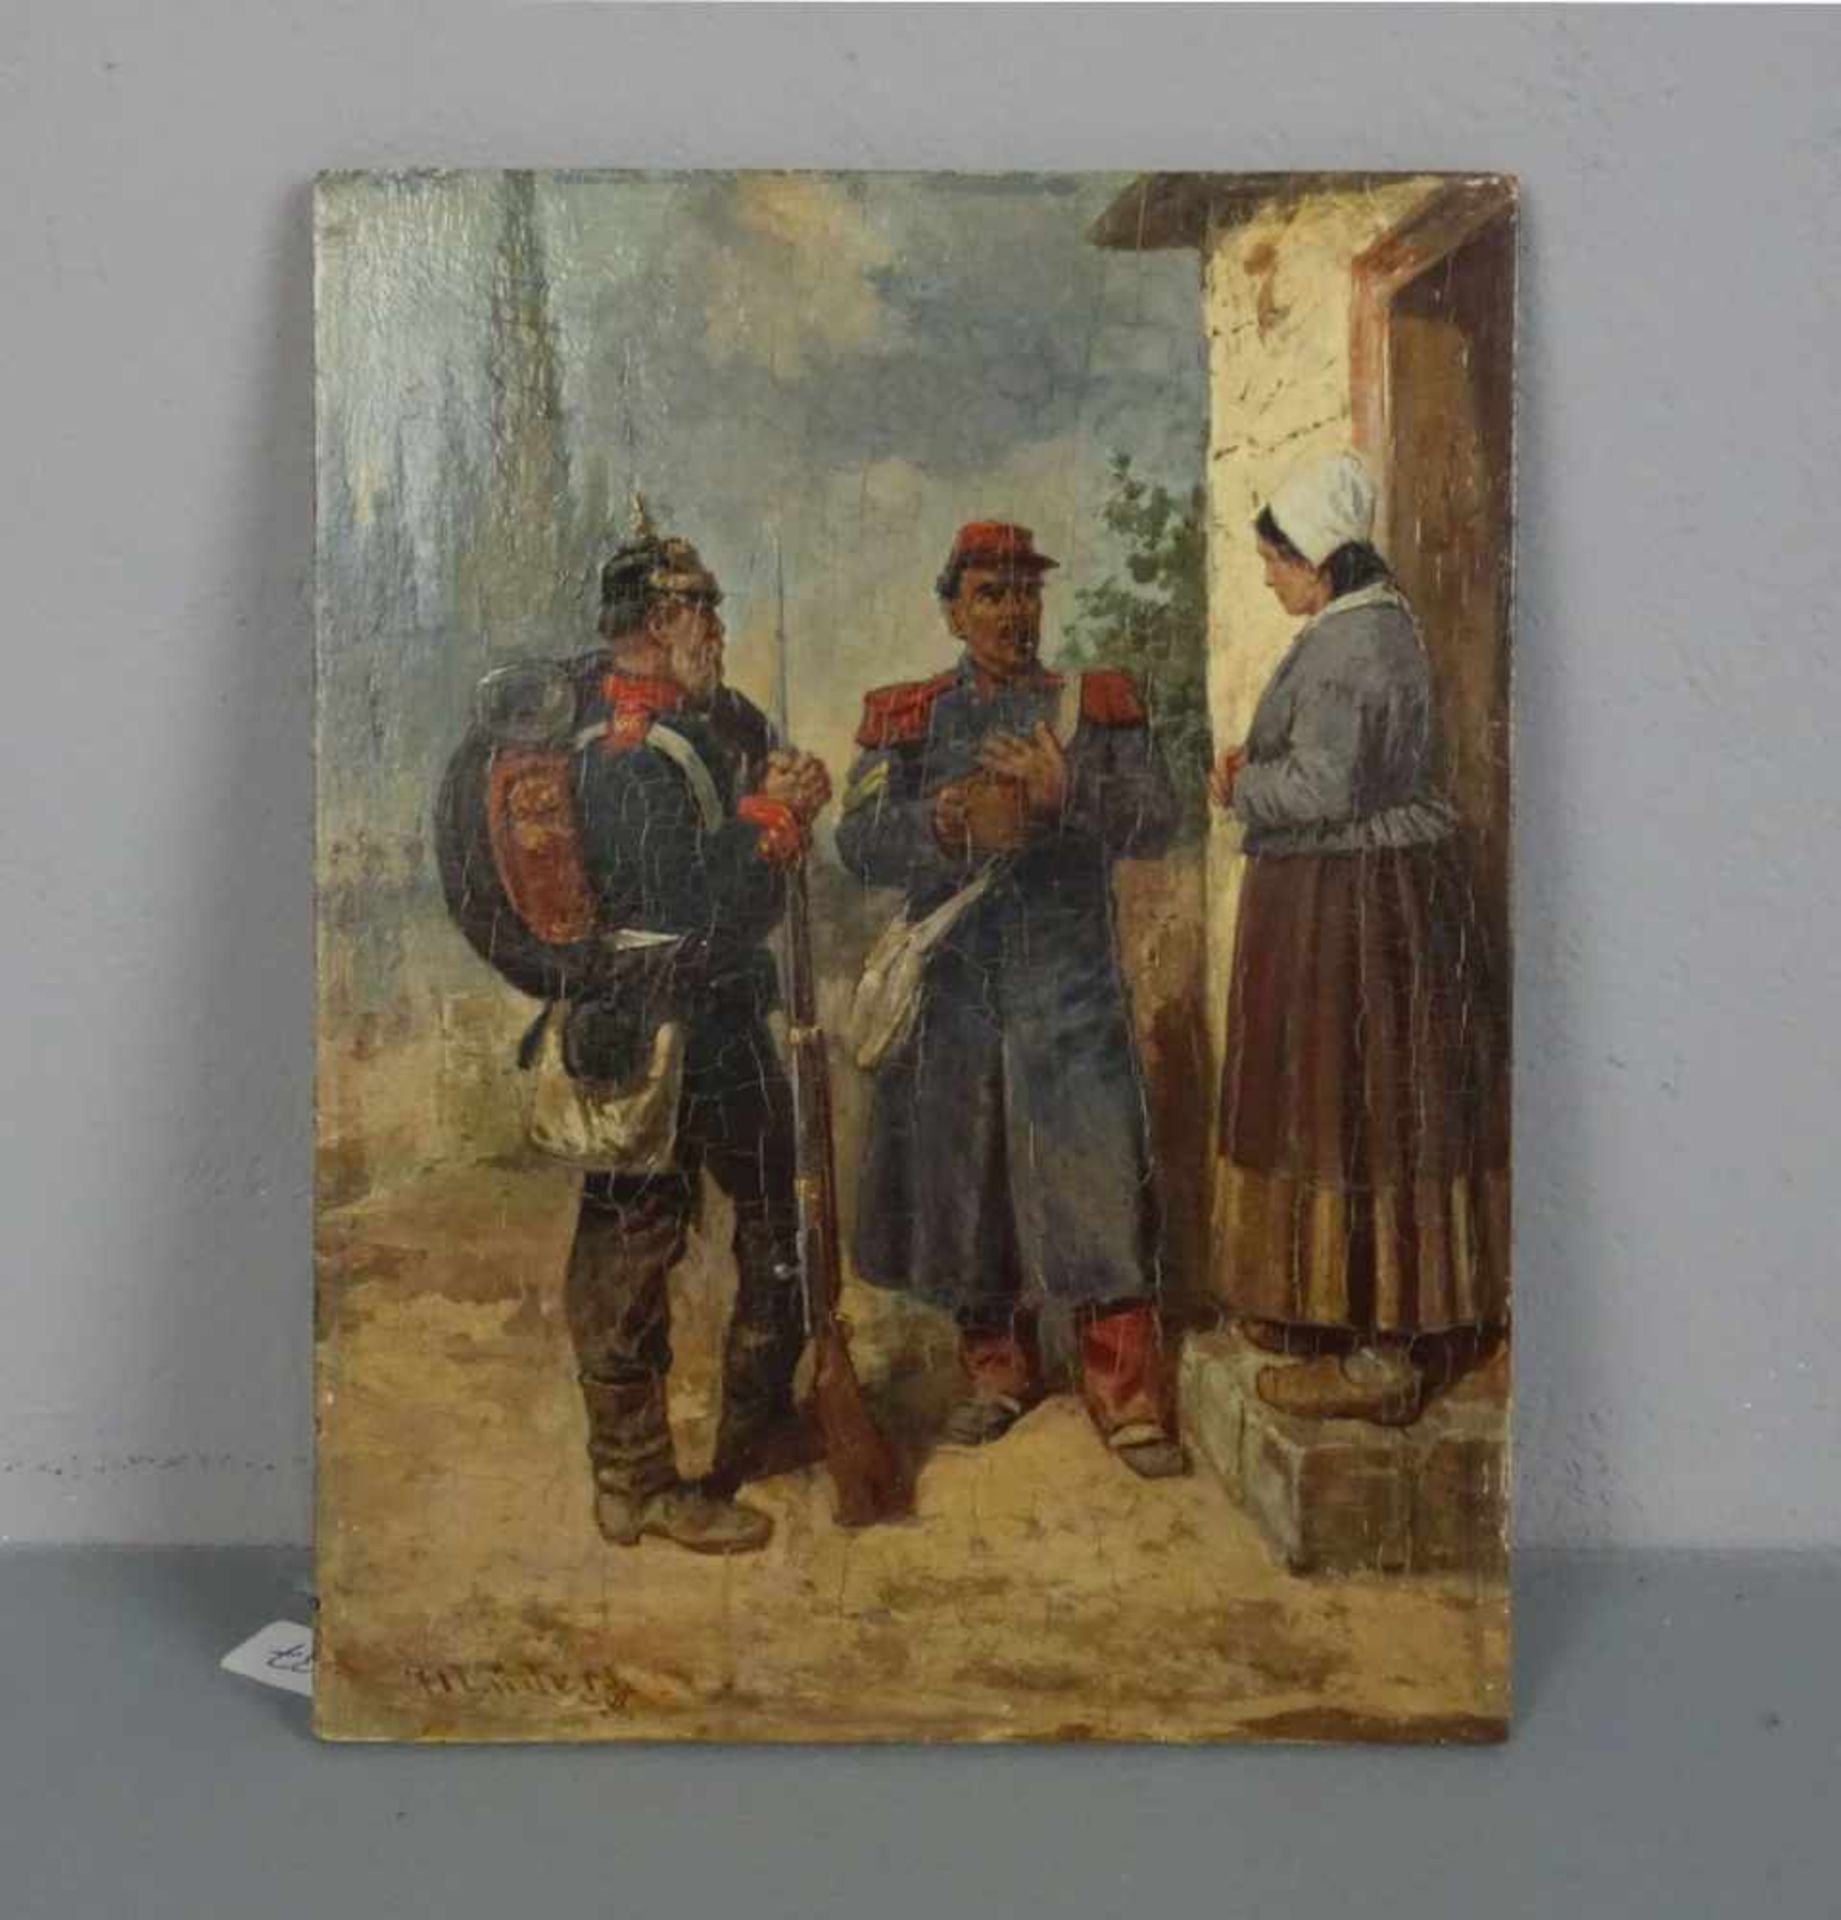 LÜDERS, HERMANN (Osterwieck 1836-1908 Groß-Lichterfelde / Berlin), Gemälde / painting: "